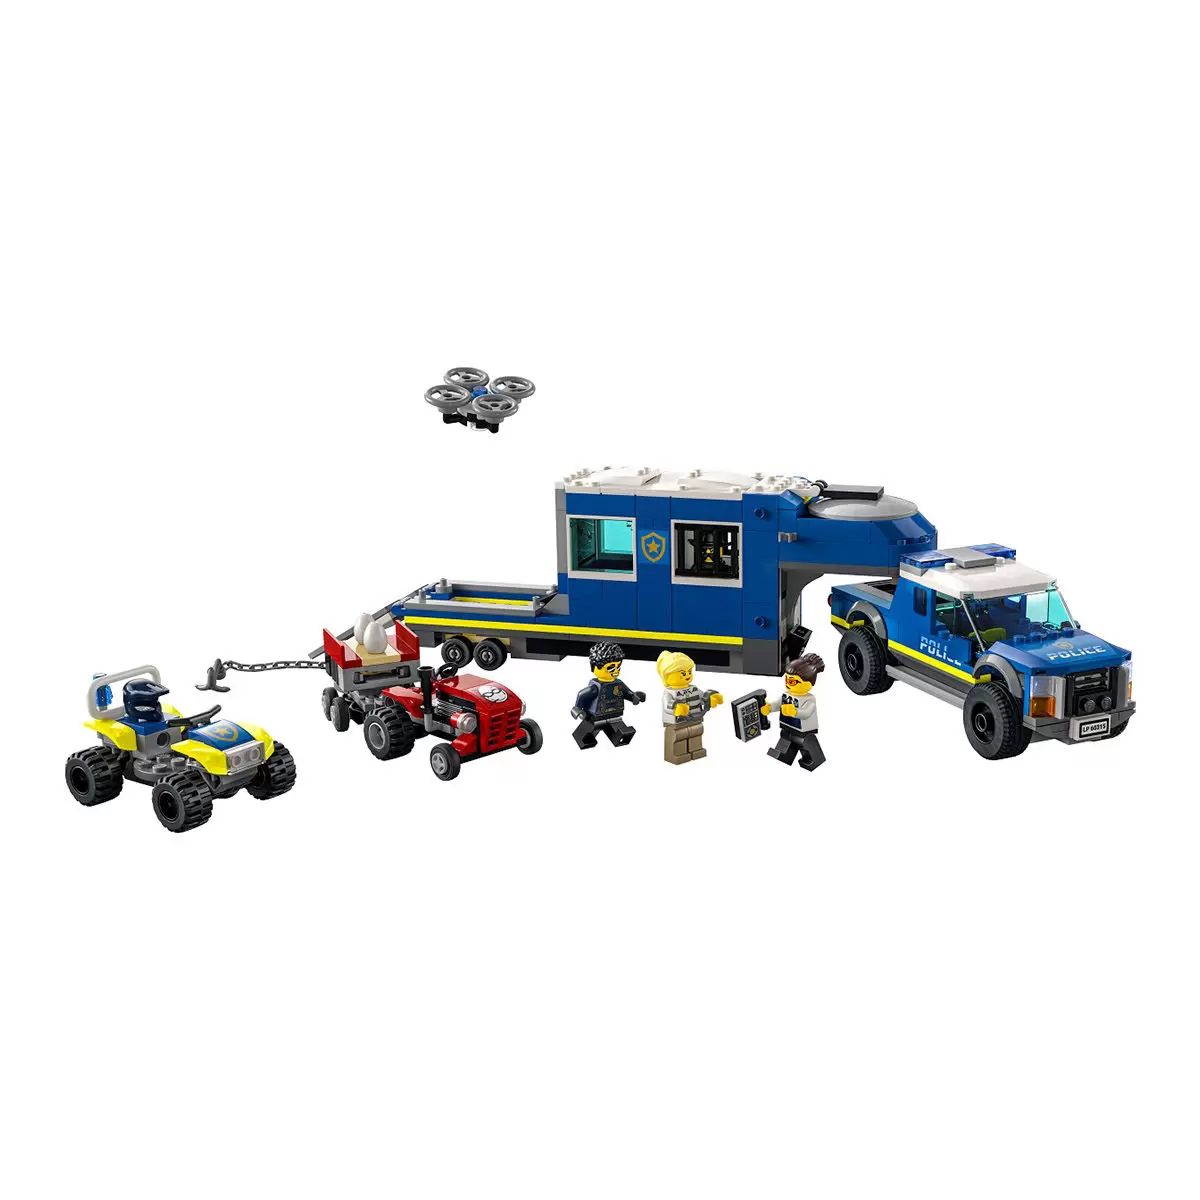 LEGO 城市系列 警察行動指揮車 60315